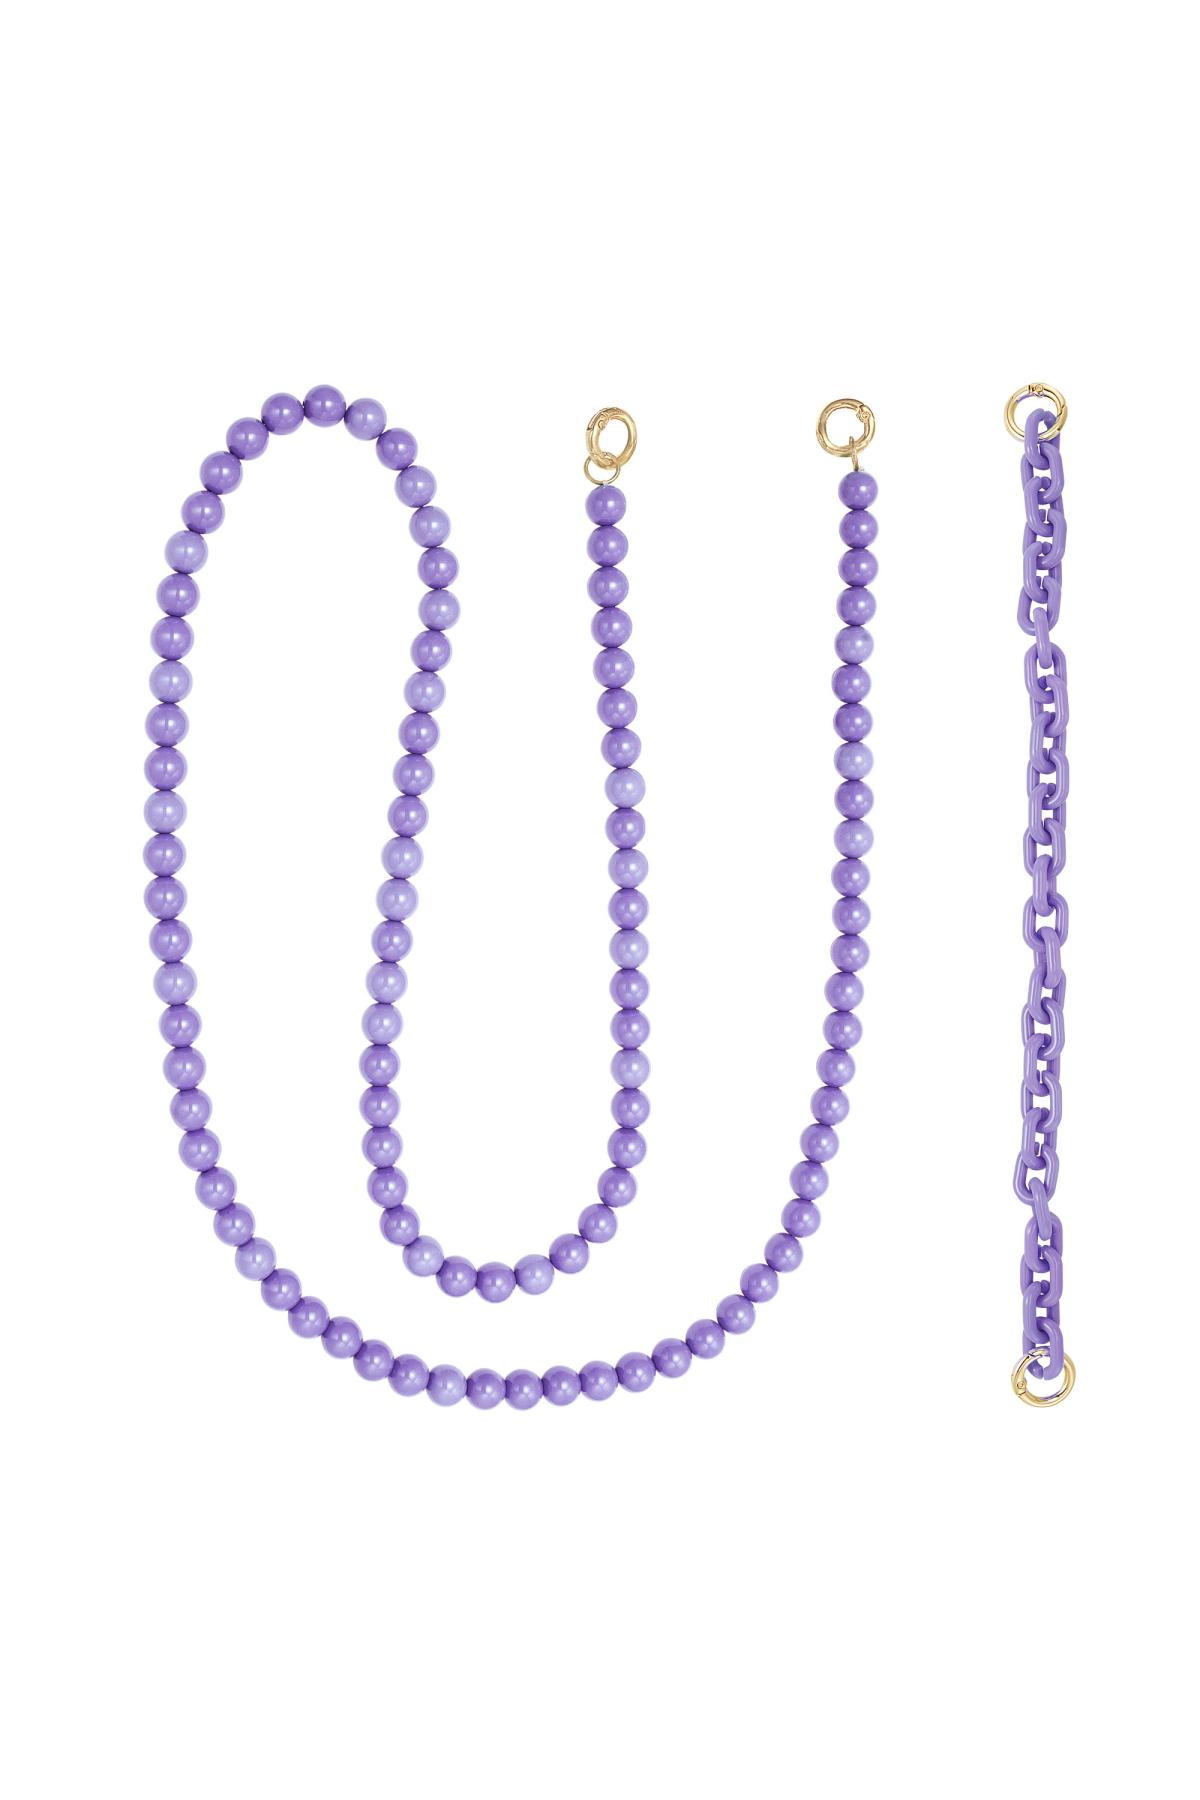 Phone cord chain Purple Alloy